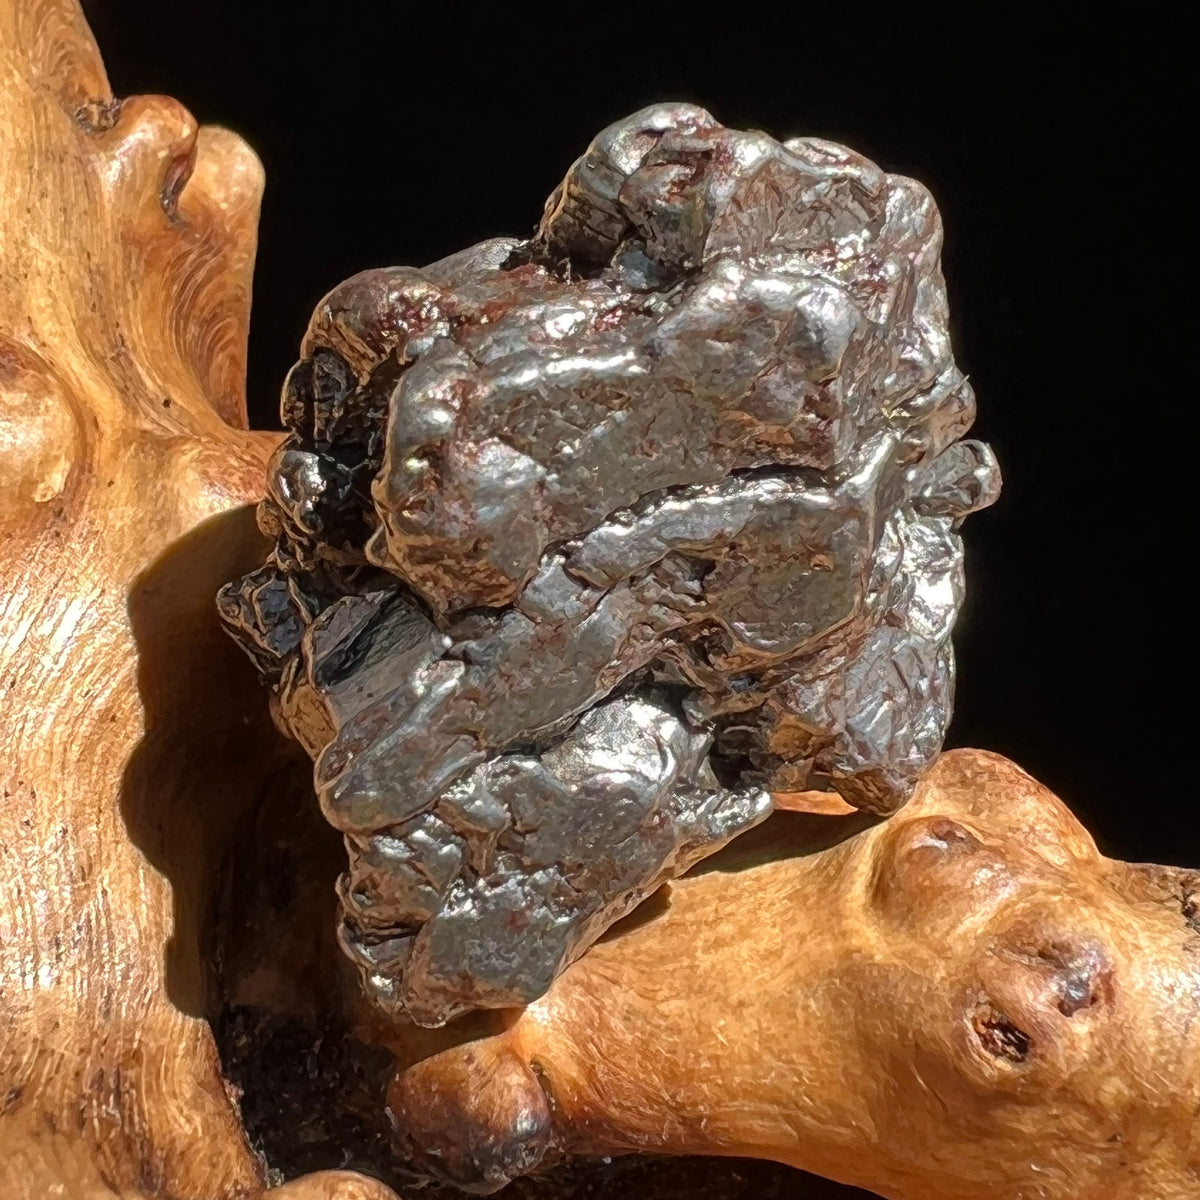 Campo Del Cielo Meteorite 27.4 grams #61-Moldavite Life